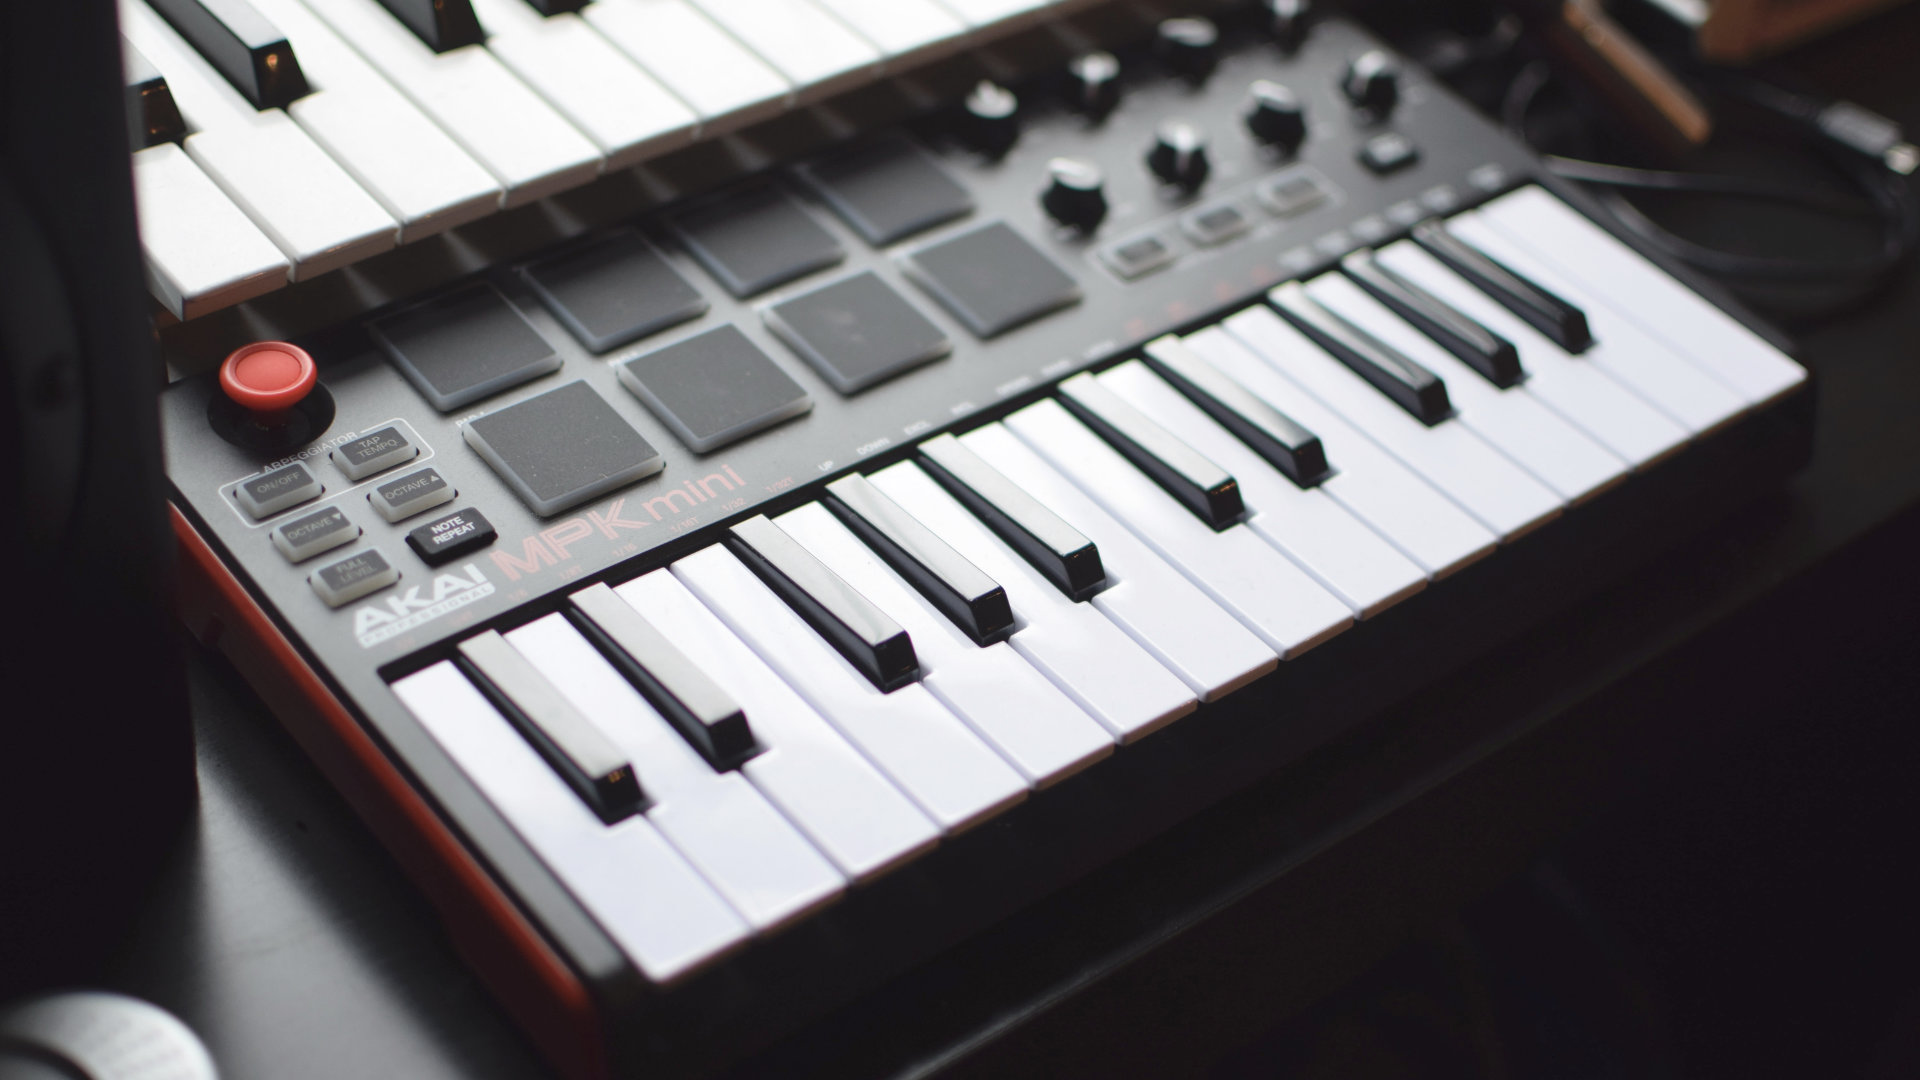 6 best usb/midi keyboard controllers for studio musicians - decibel peak